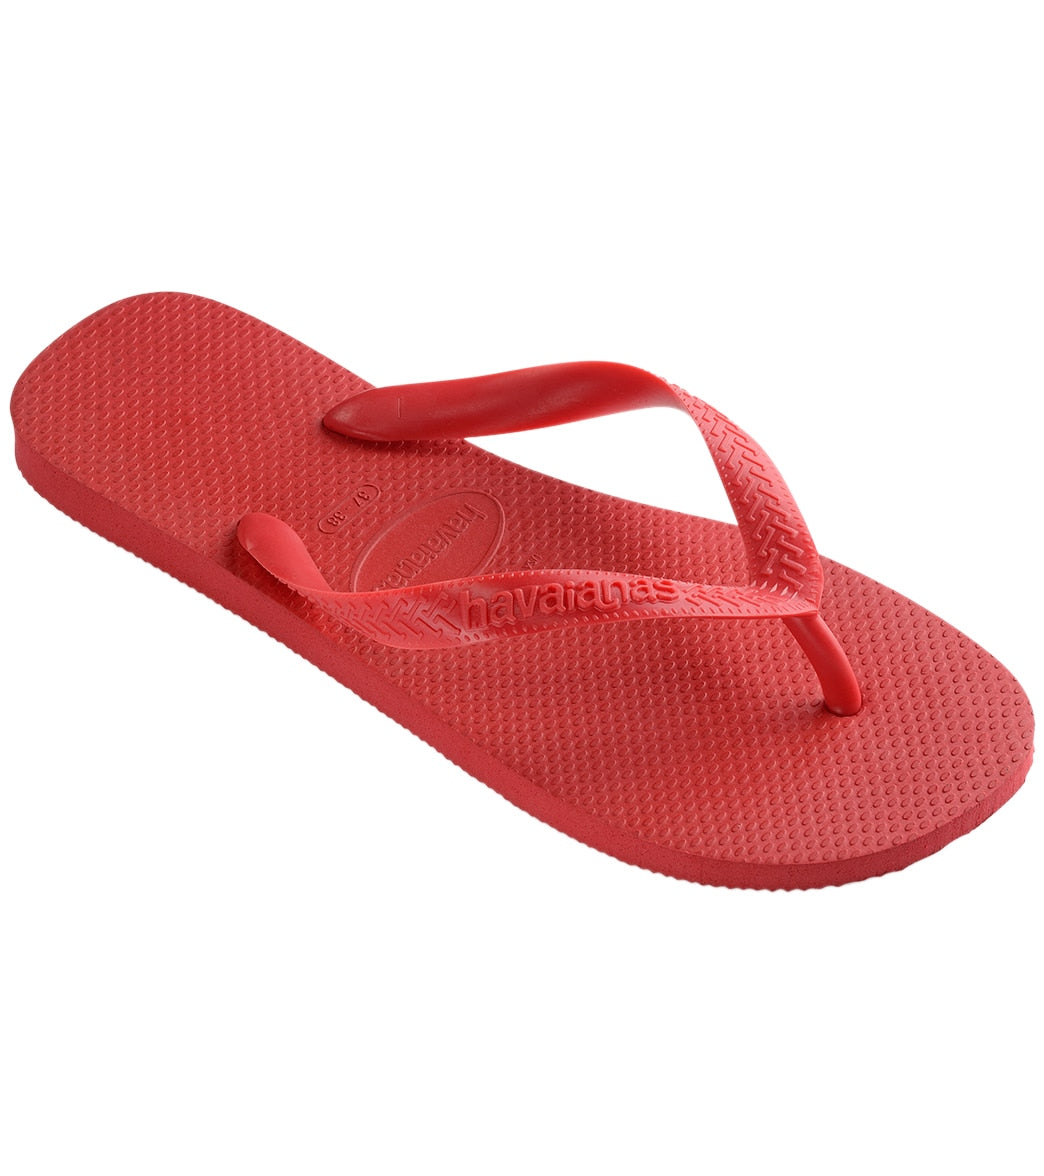 Havaianas Top Flip Flop - Ruby Red 41/42 - Swimoutlet.com